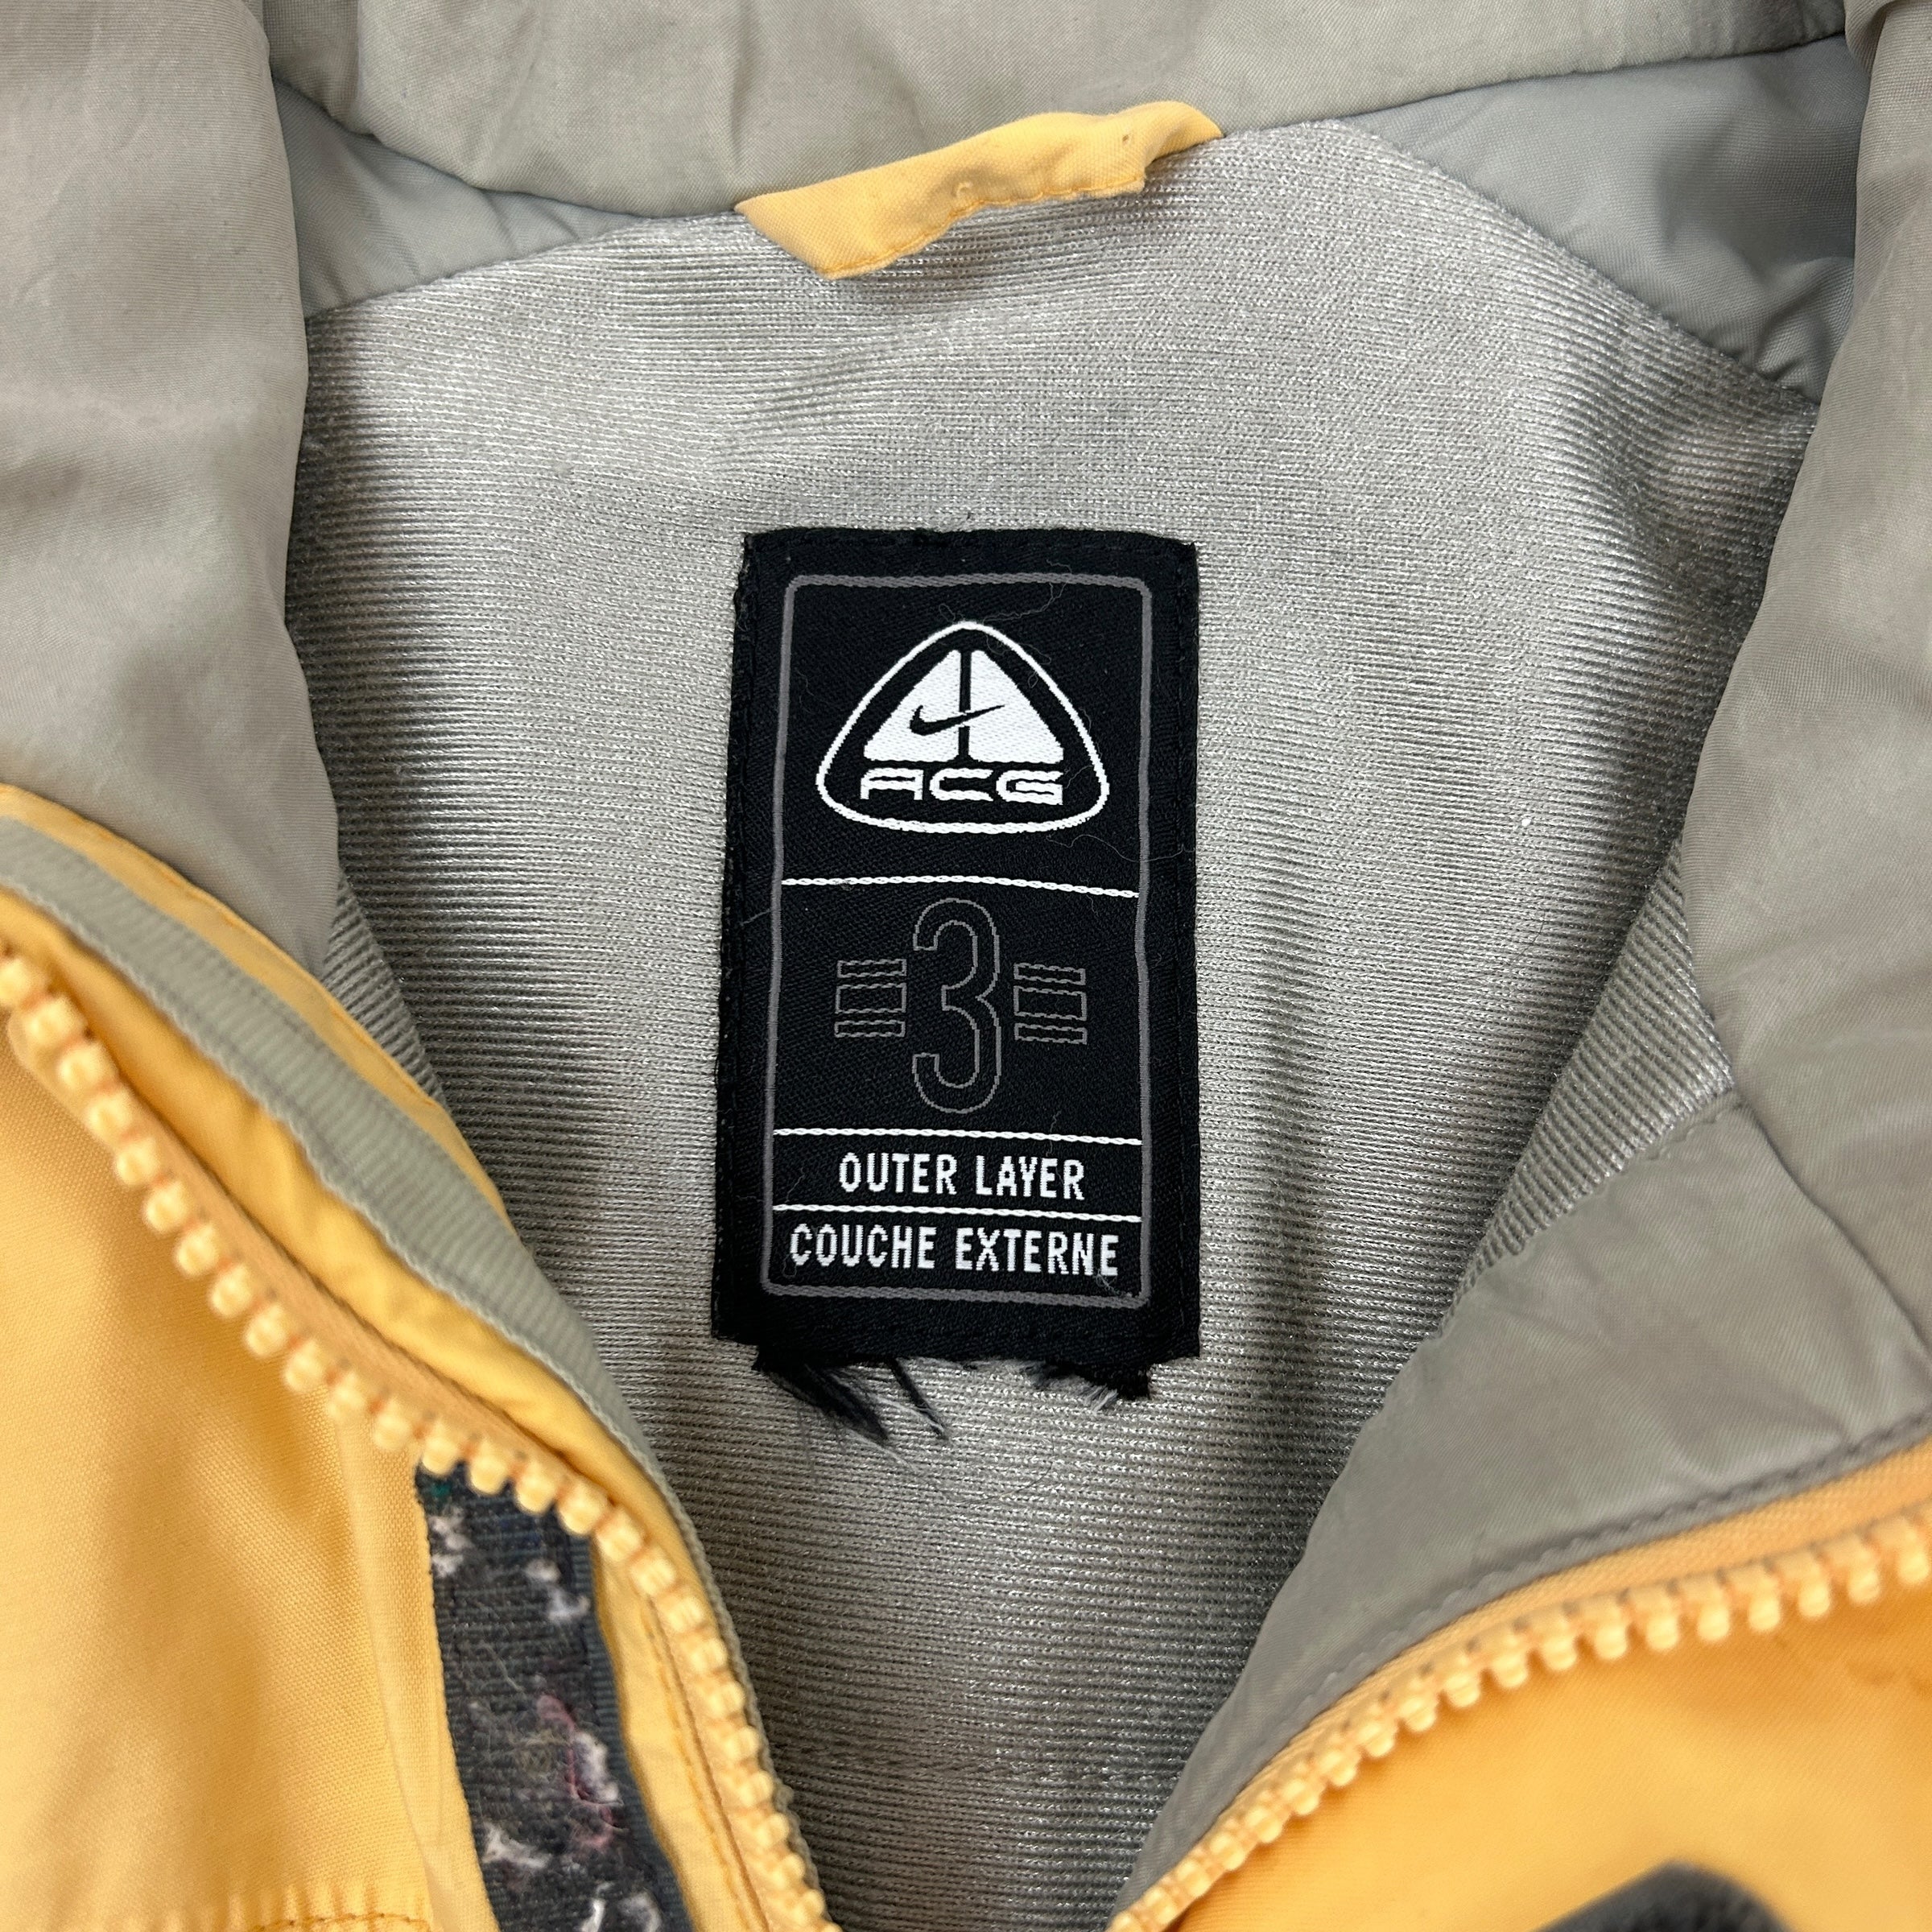 Vintage Nike ACG Storm-Fit Jacket Yellow